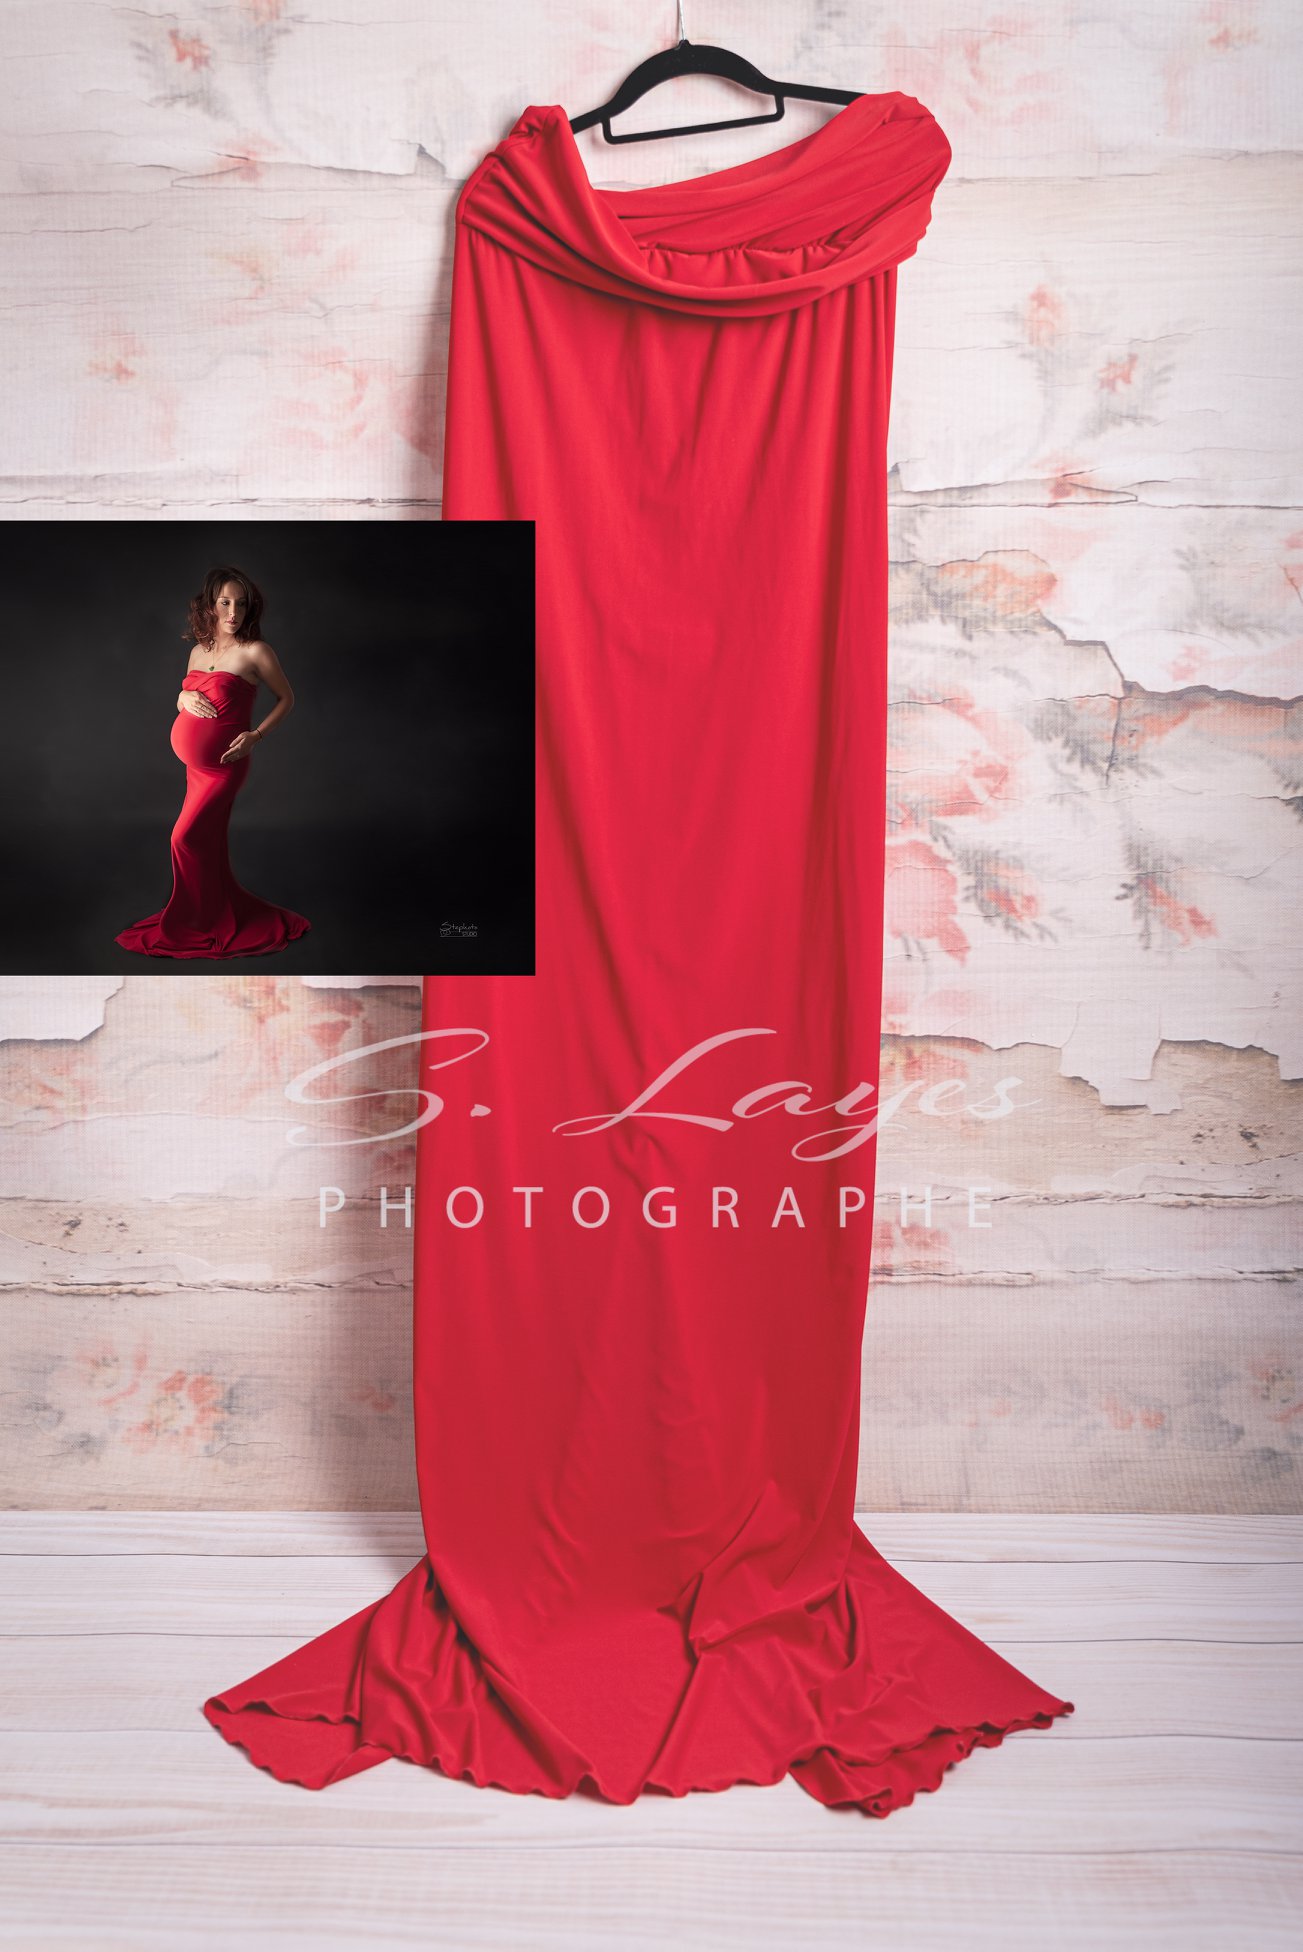 Robe grossesse stephanie layes photographe